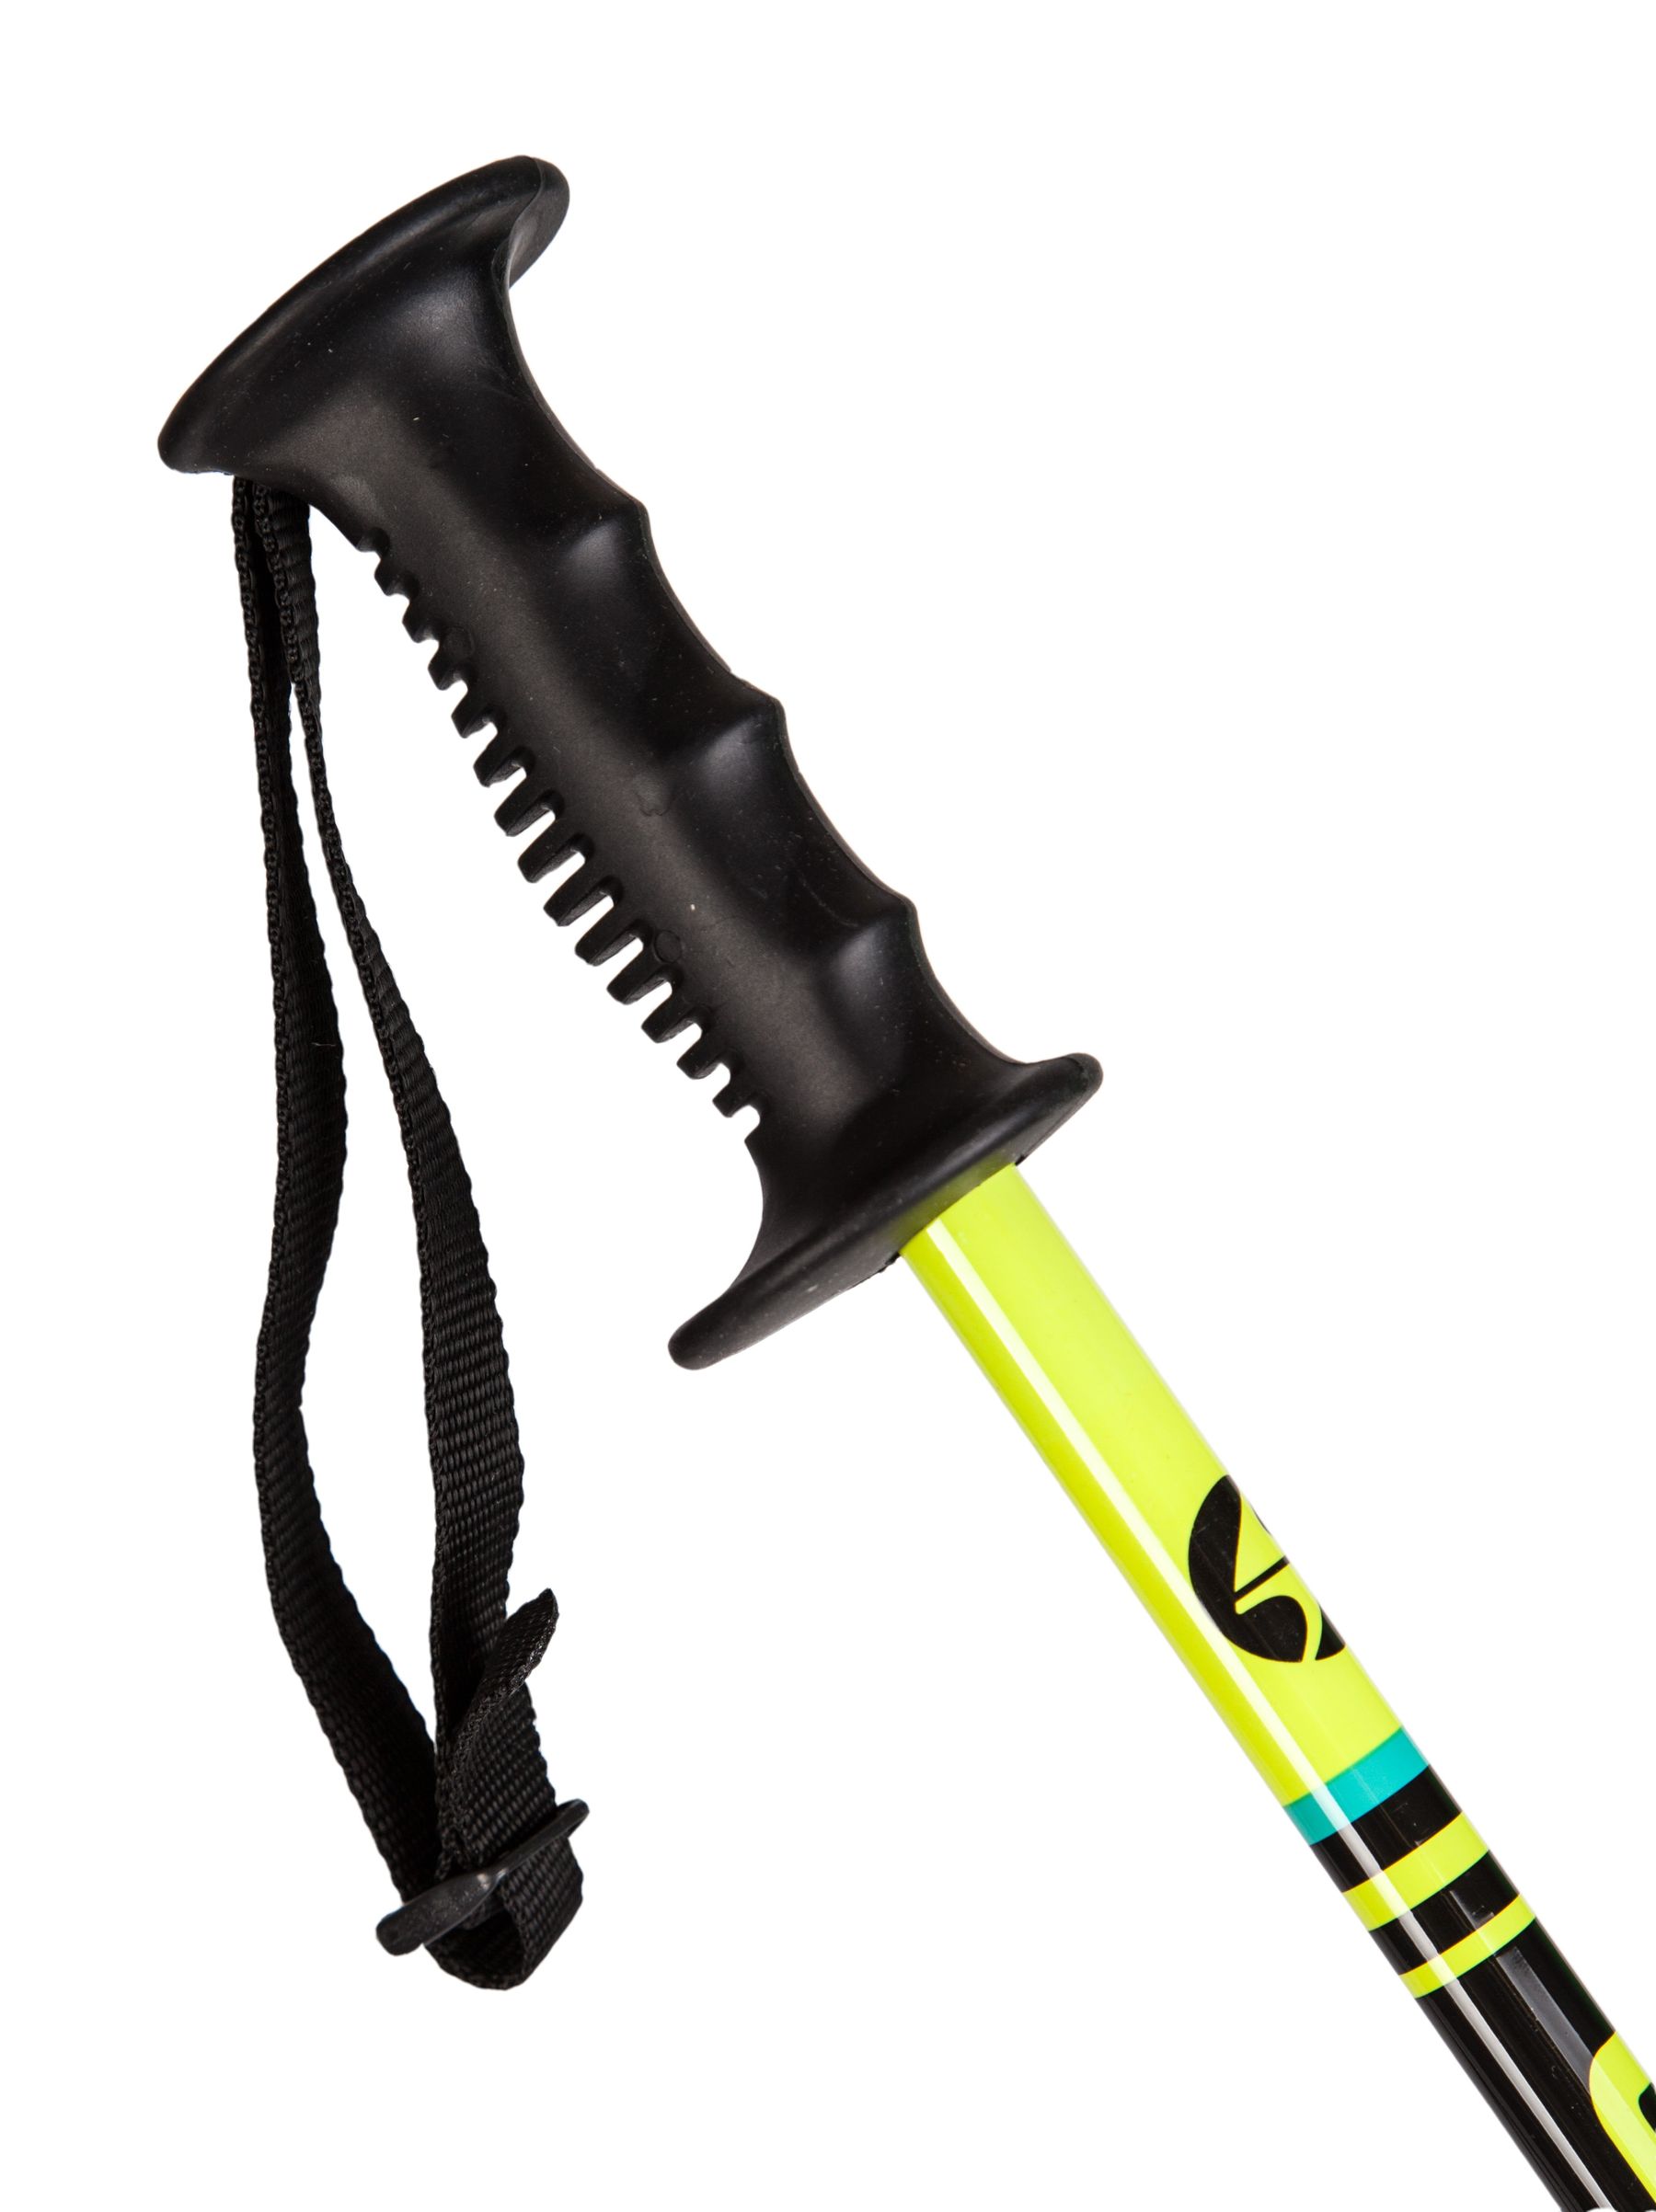 Race junior ski poles, yellow/black